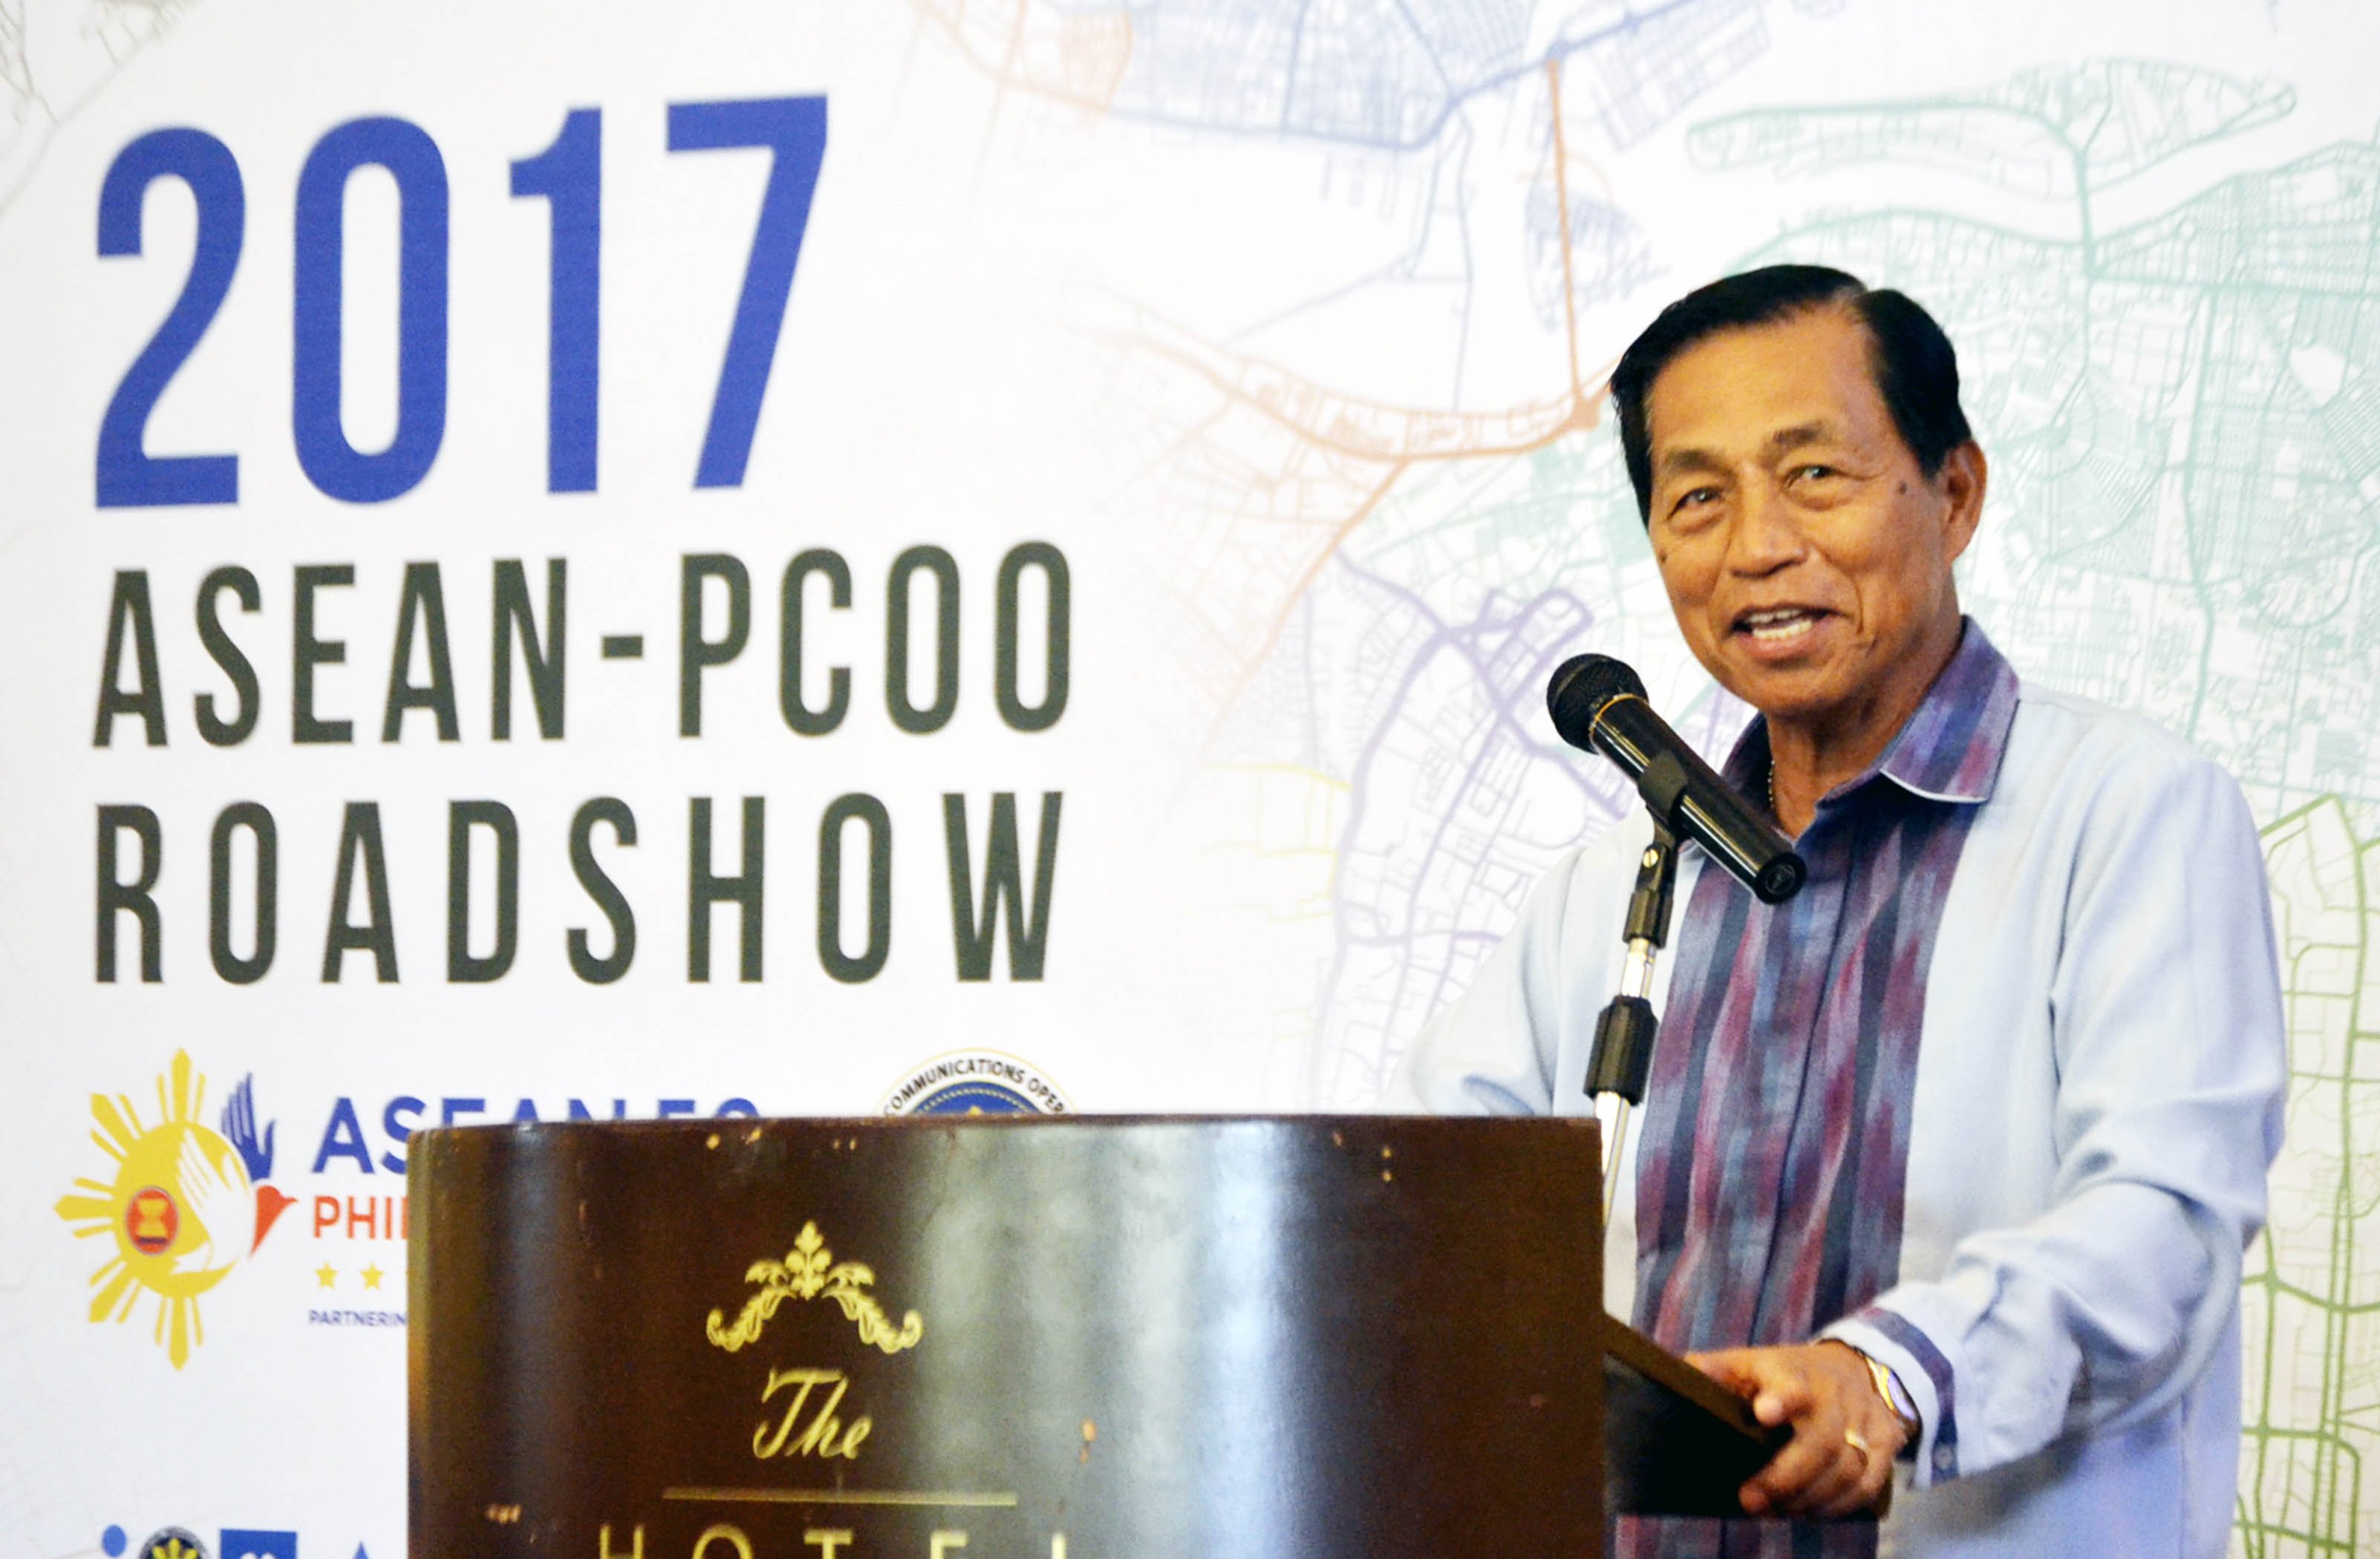 2017 ASEAN-PCOO Roadshow in Baguio City